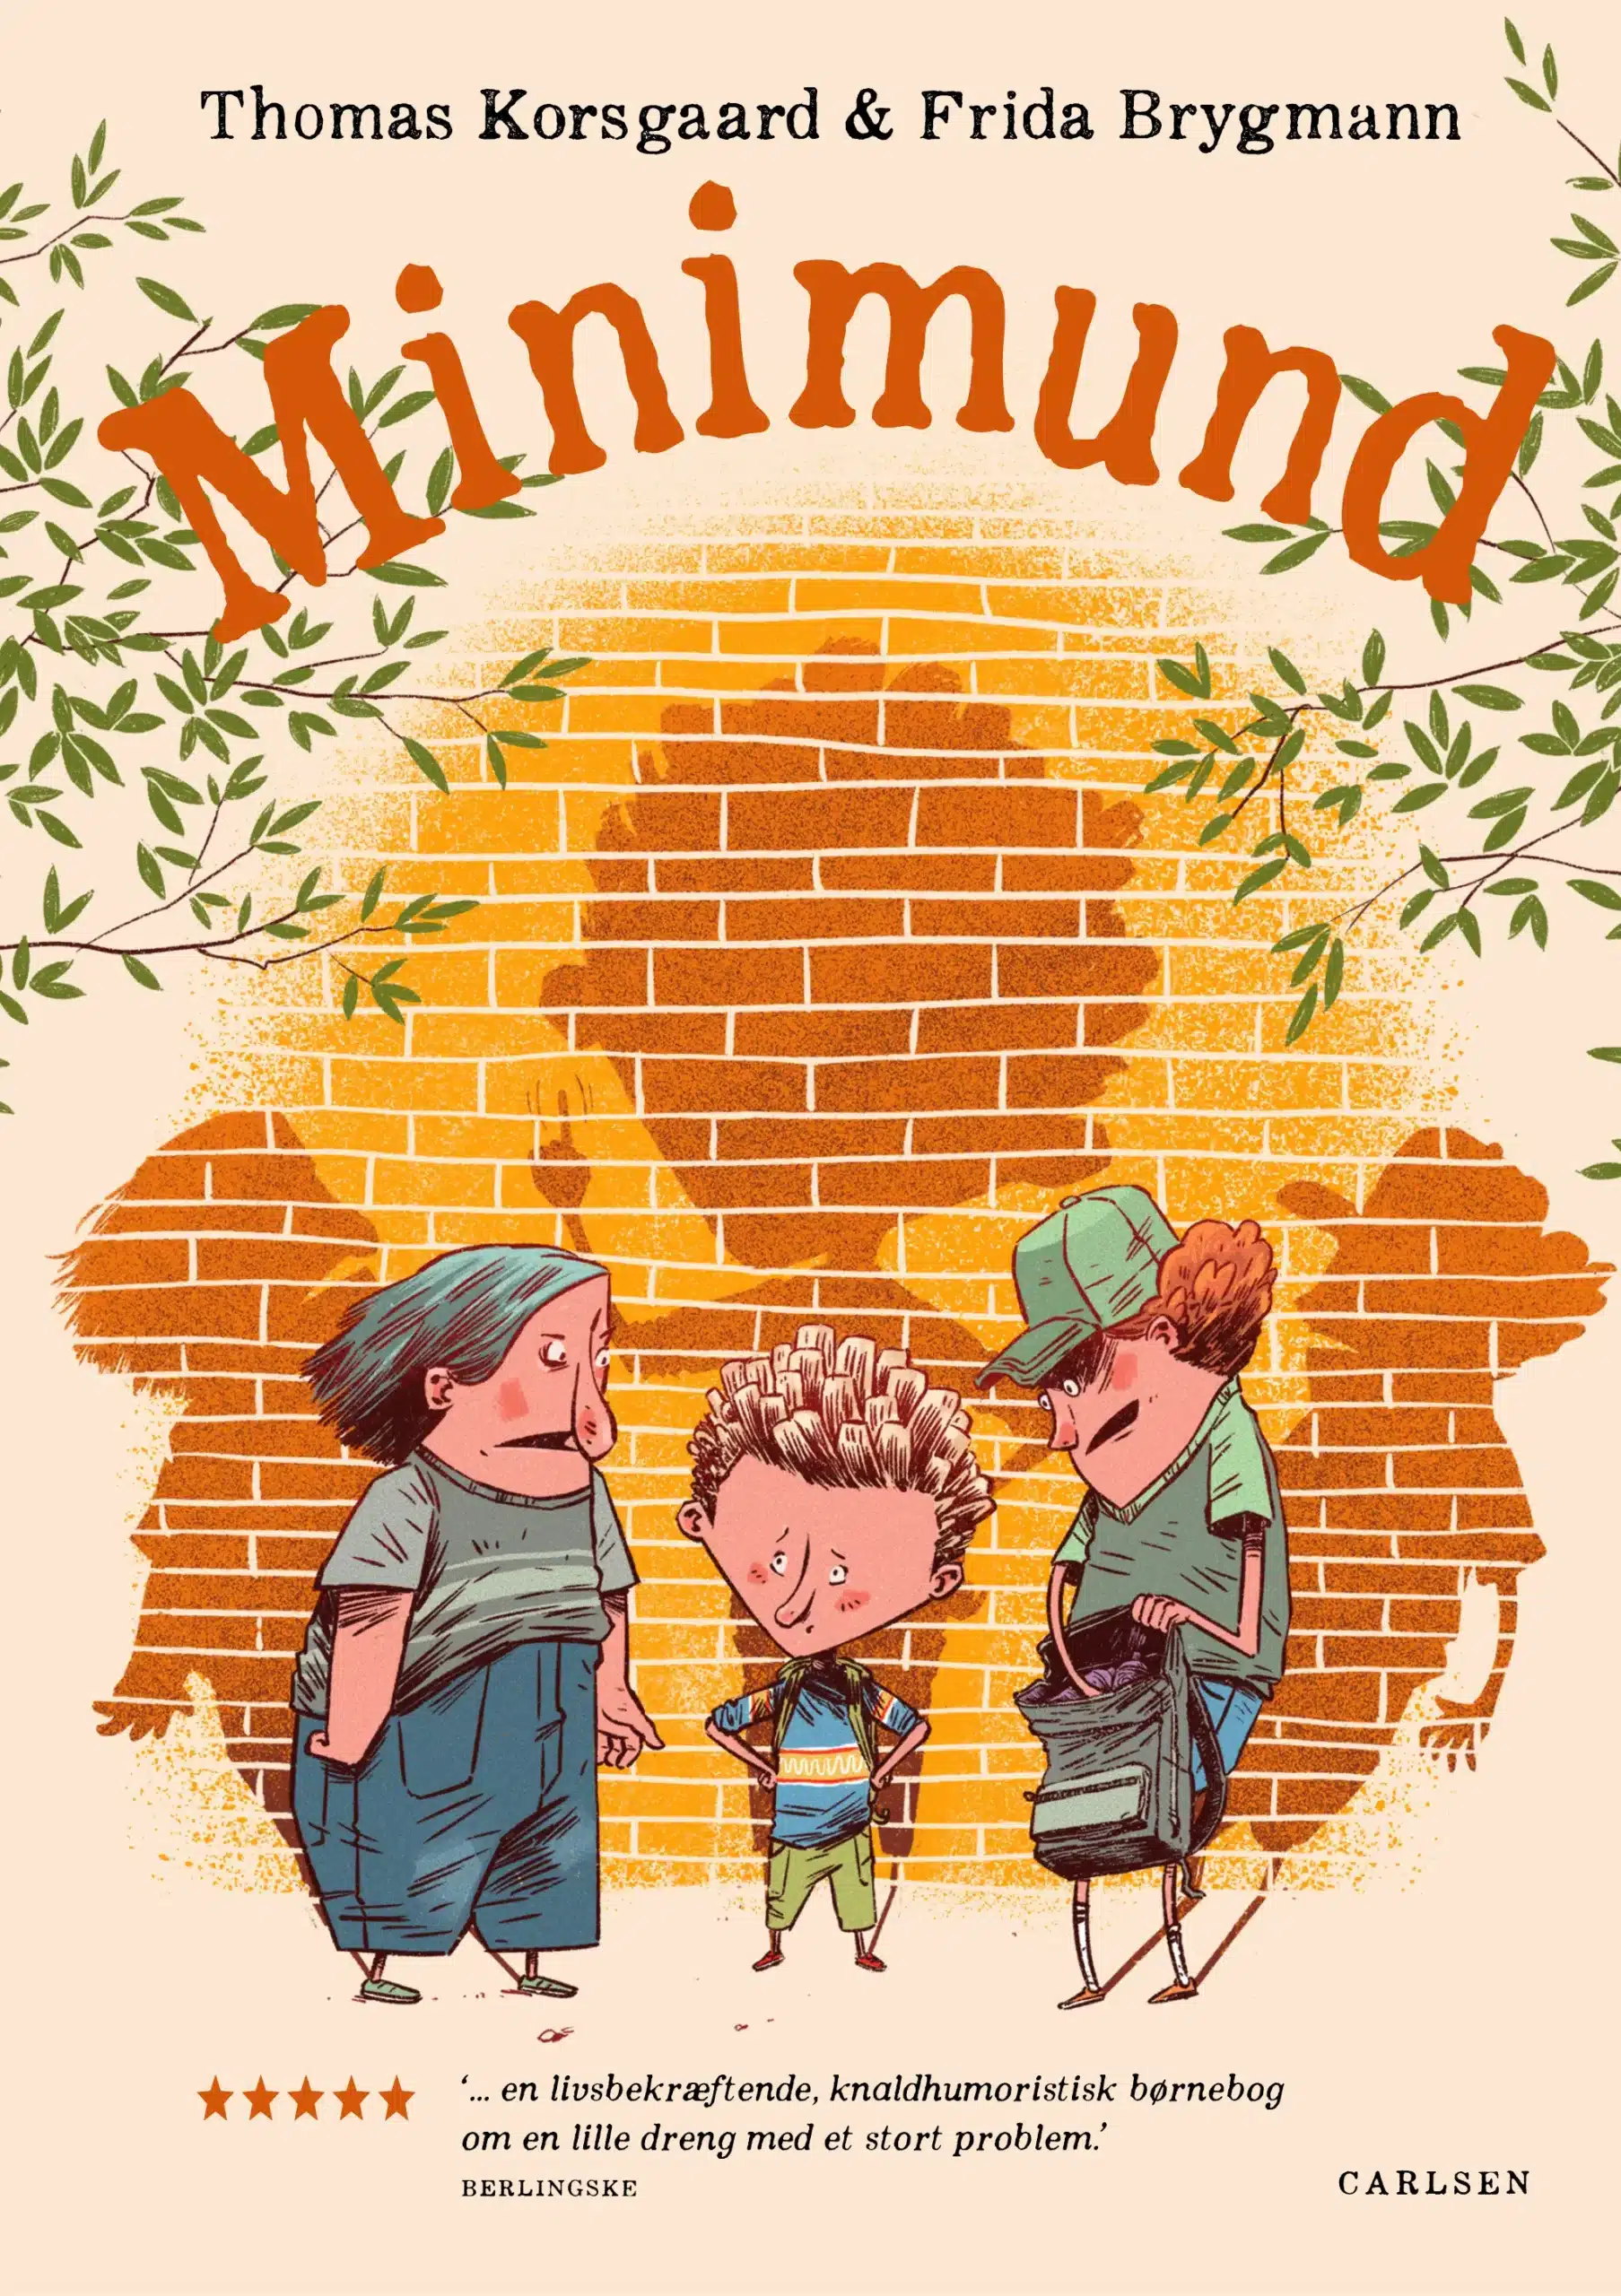 Minimund: Bedstevennerne Frida Brygmann og Thomas Korsgaard har skrevet en bog